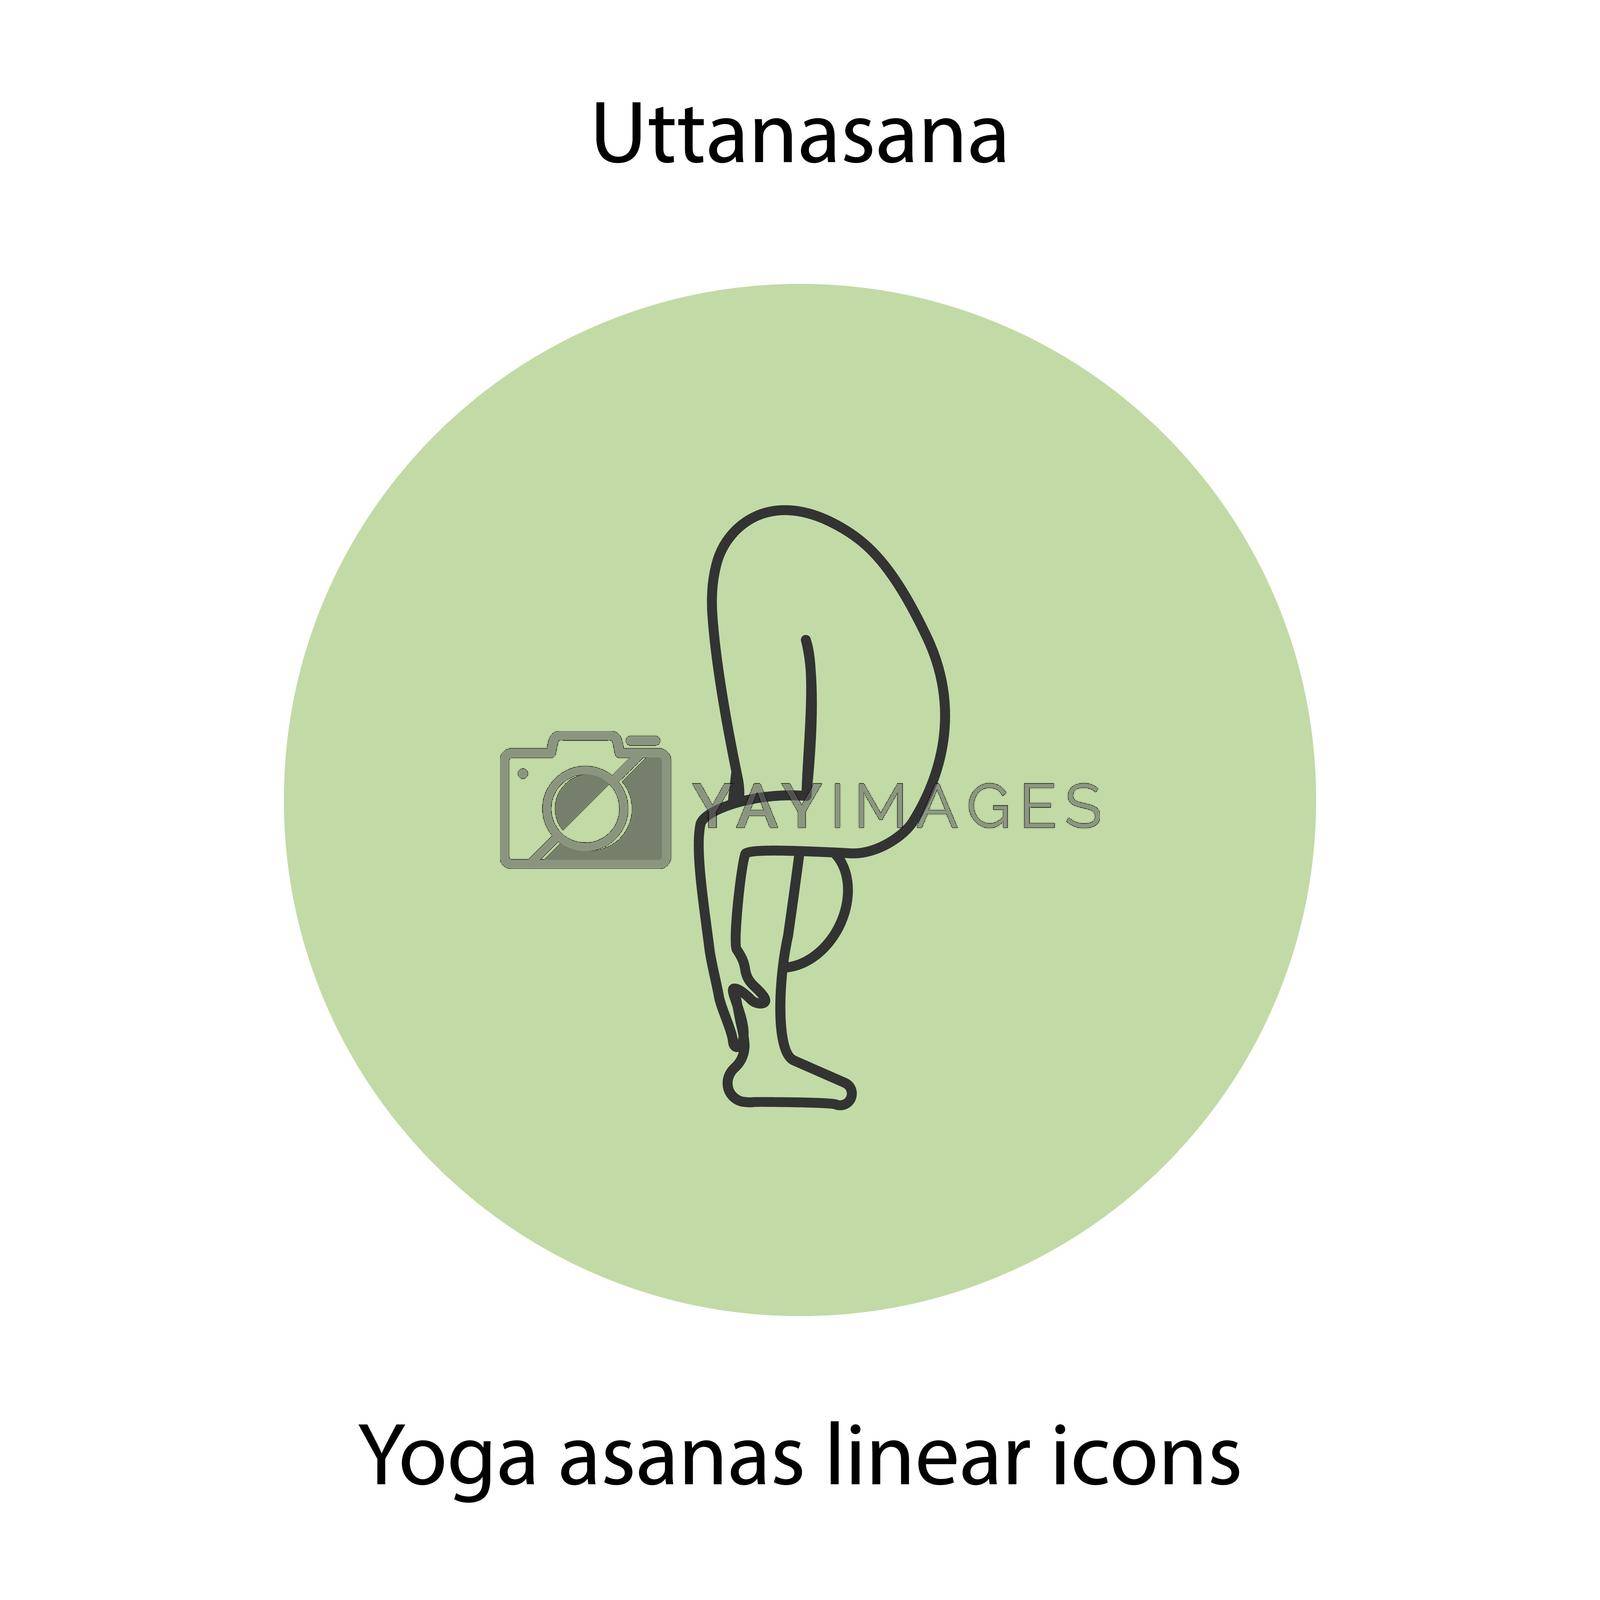 Uttanasana yoga position linear icon. Thin line illustration. Yoga asana contour symbol. Vector isolated outline drawing